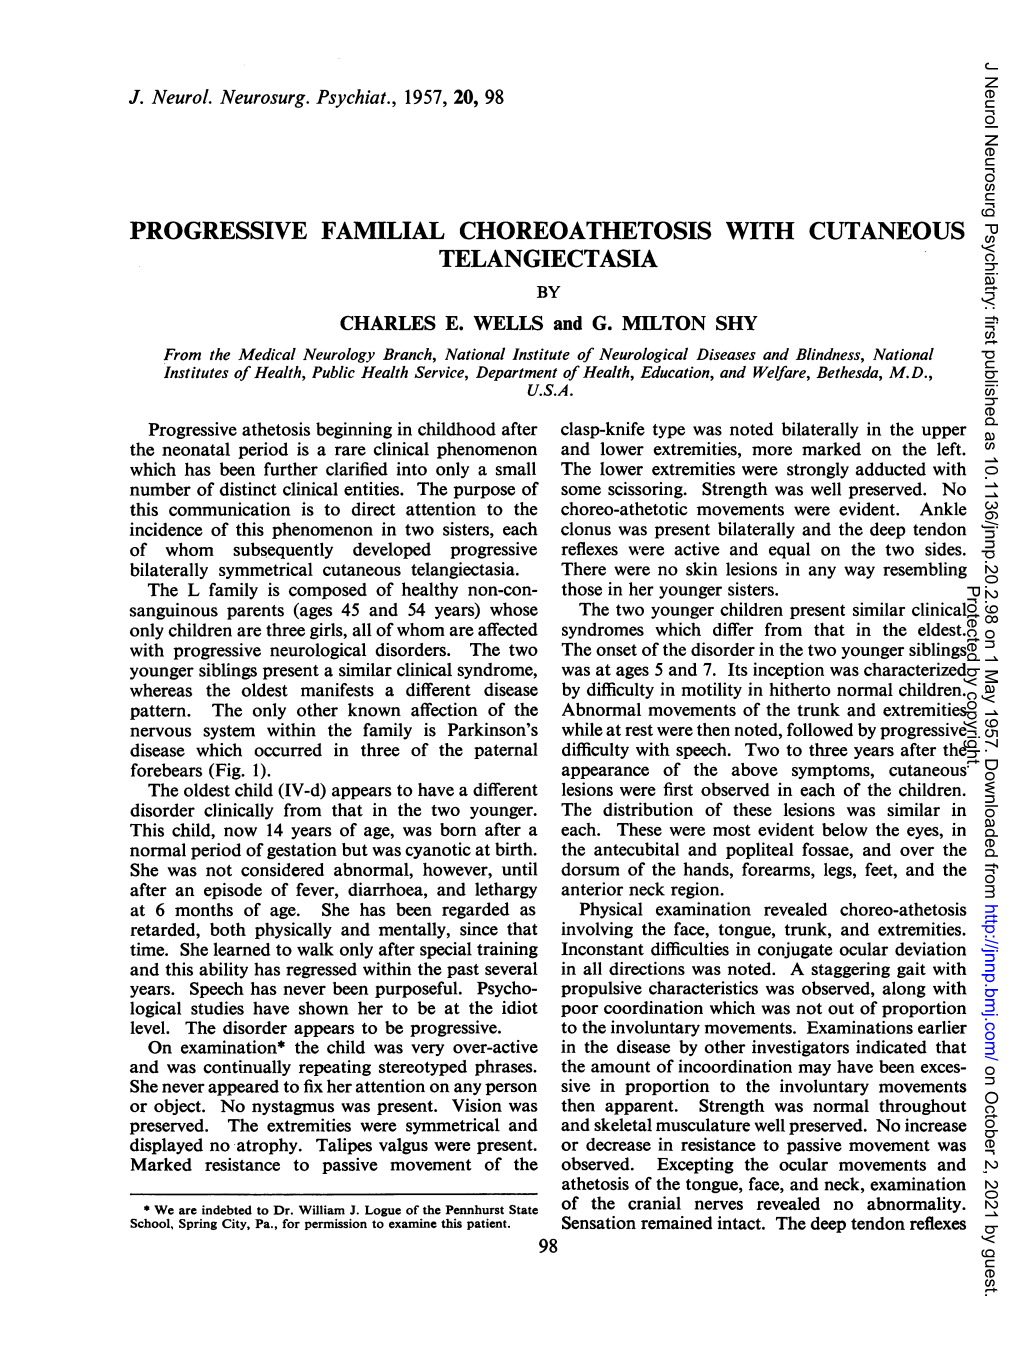 Progressive Familial Choreoathetosis with Cutaneous Telangiectasia by Charles E